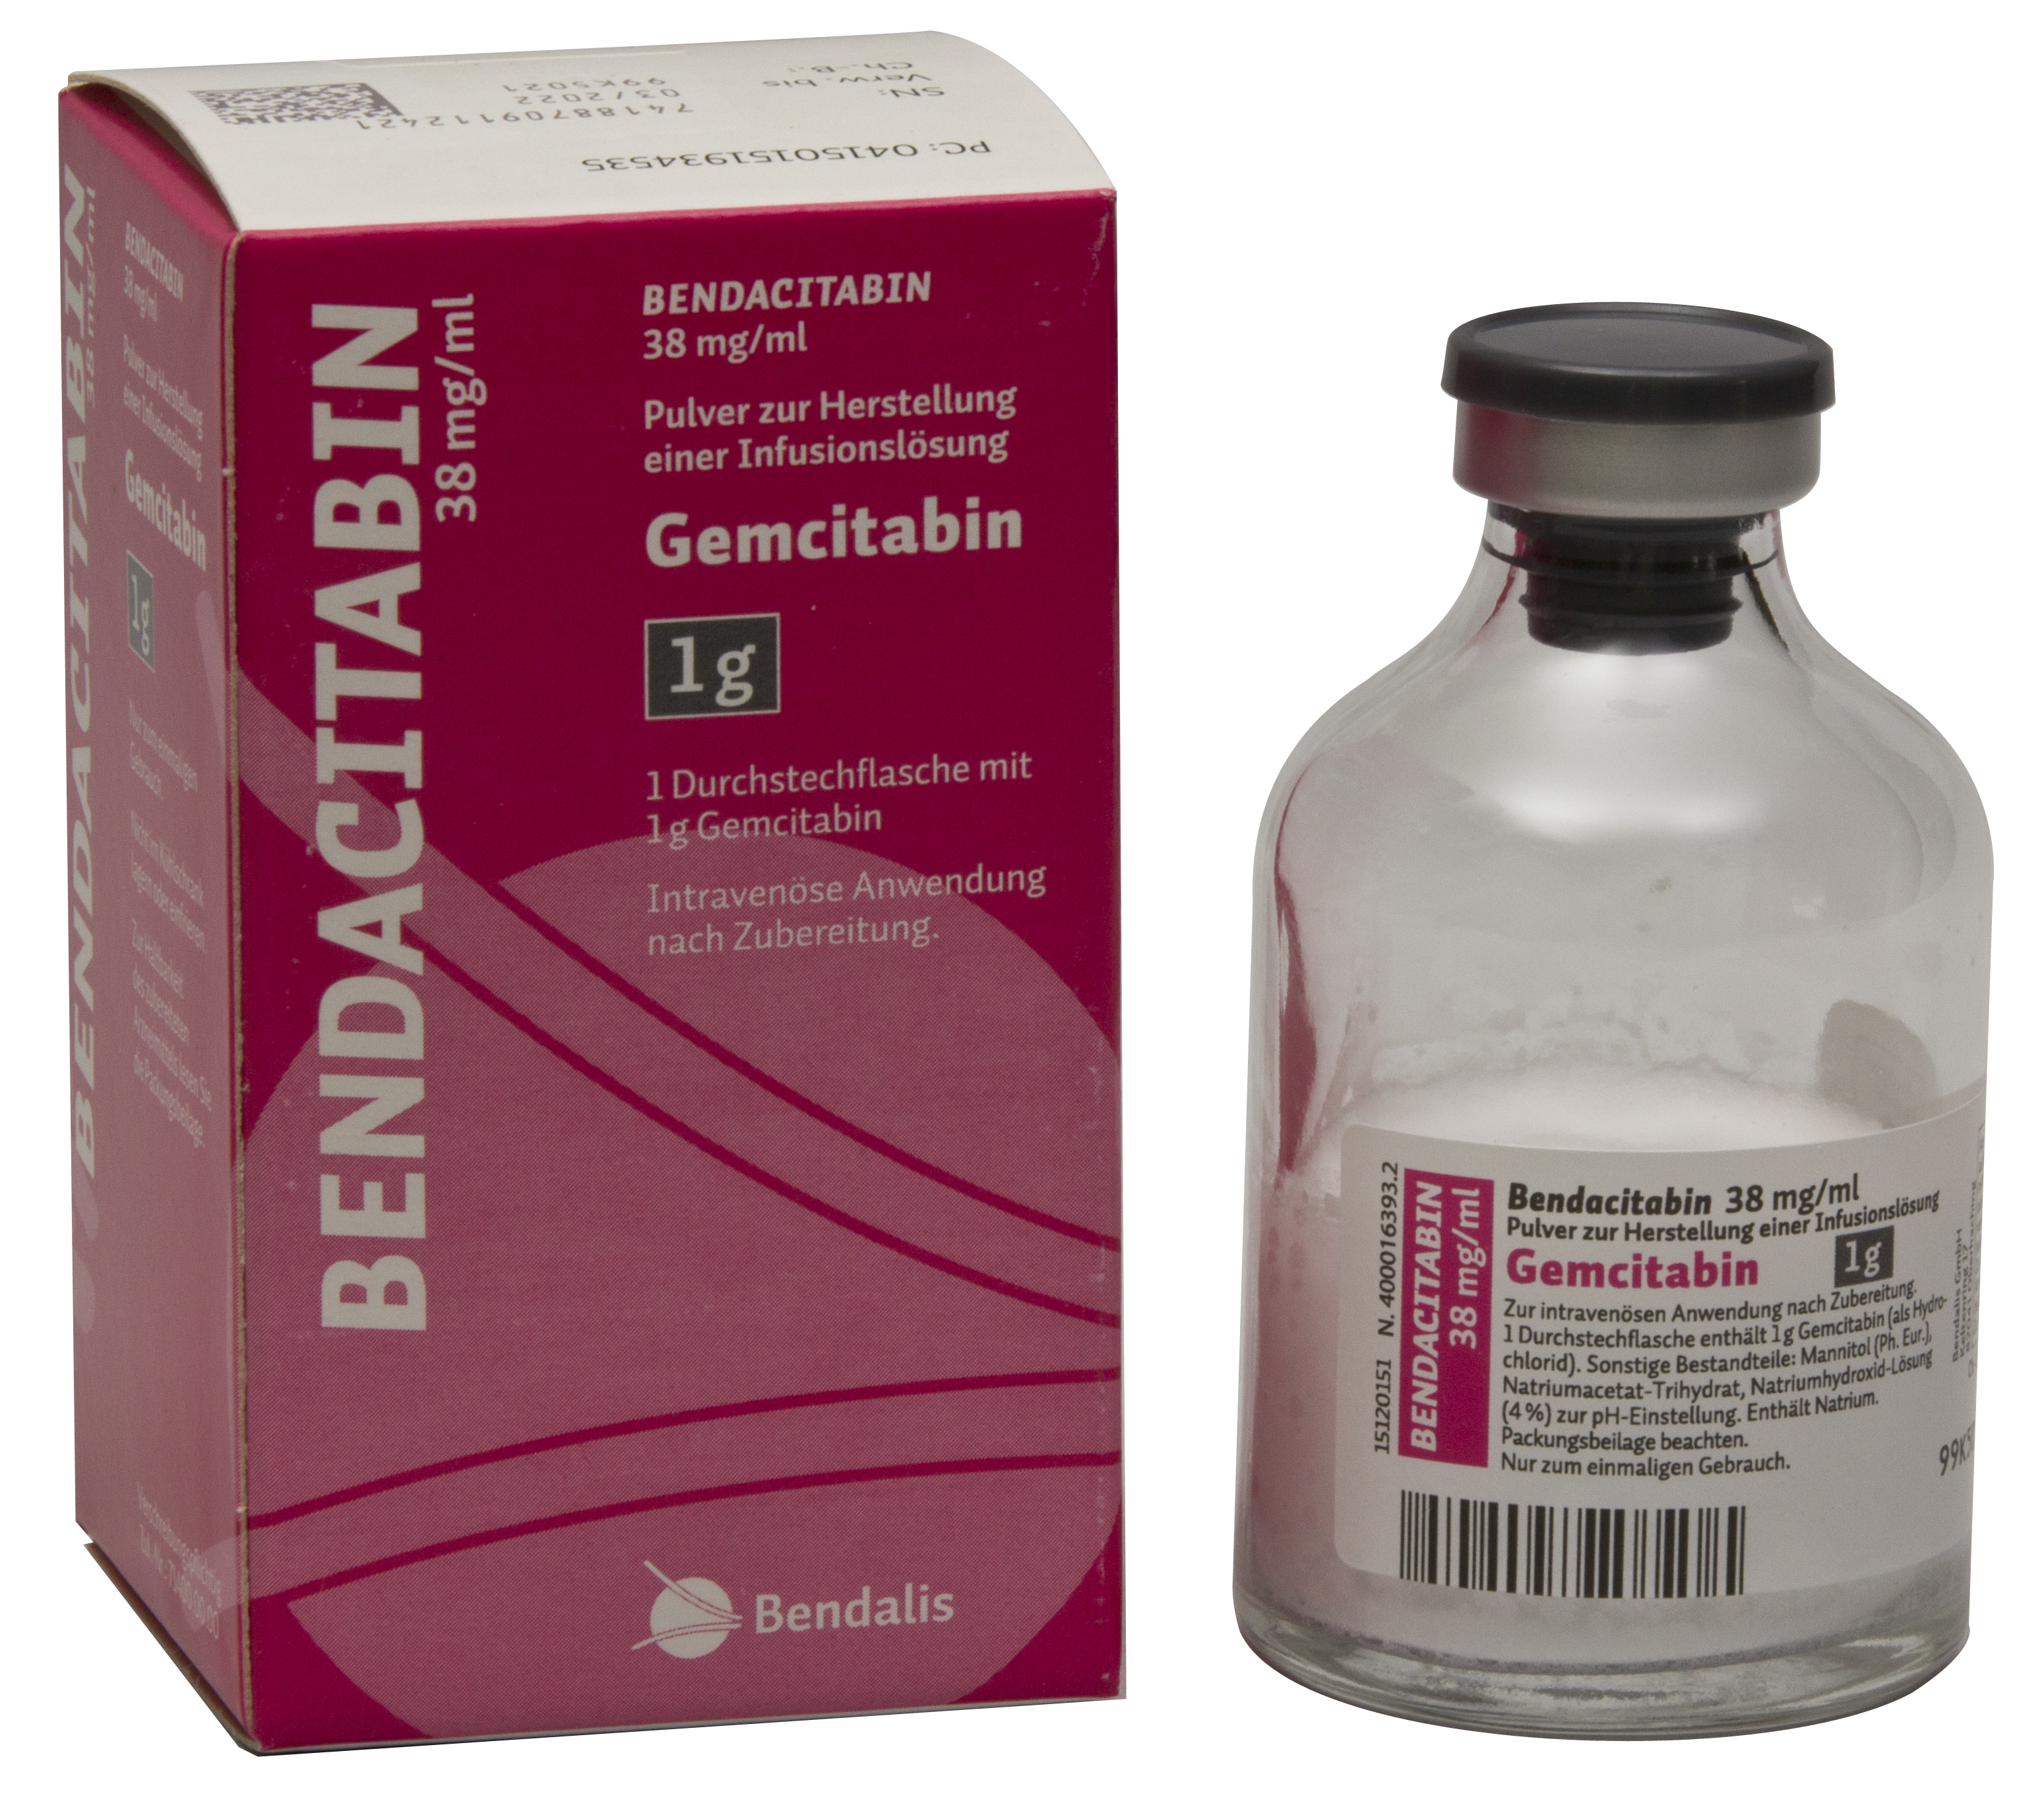 Bendacitabin 38 mg/ml (Gemcitabine)